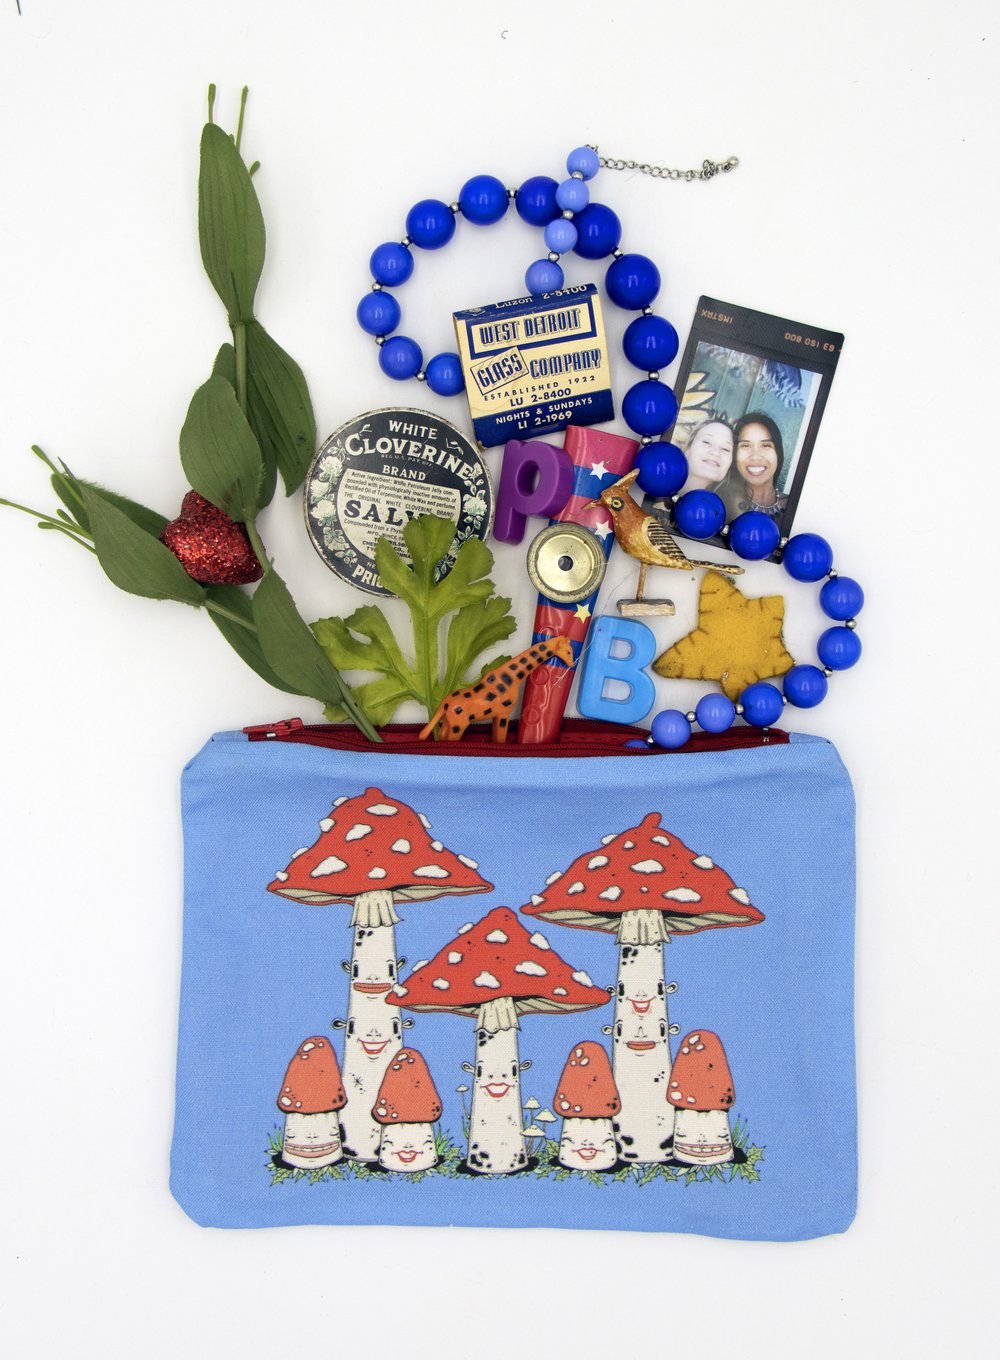 Amanita Fly agaric mushroom fabric print canvas pouch with zipper coin  purse cosmetic bag — Artwork by Danielle O'Malley